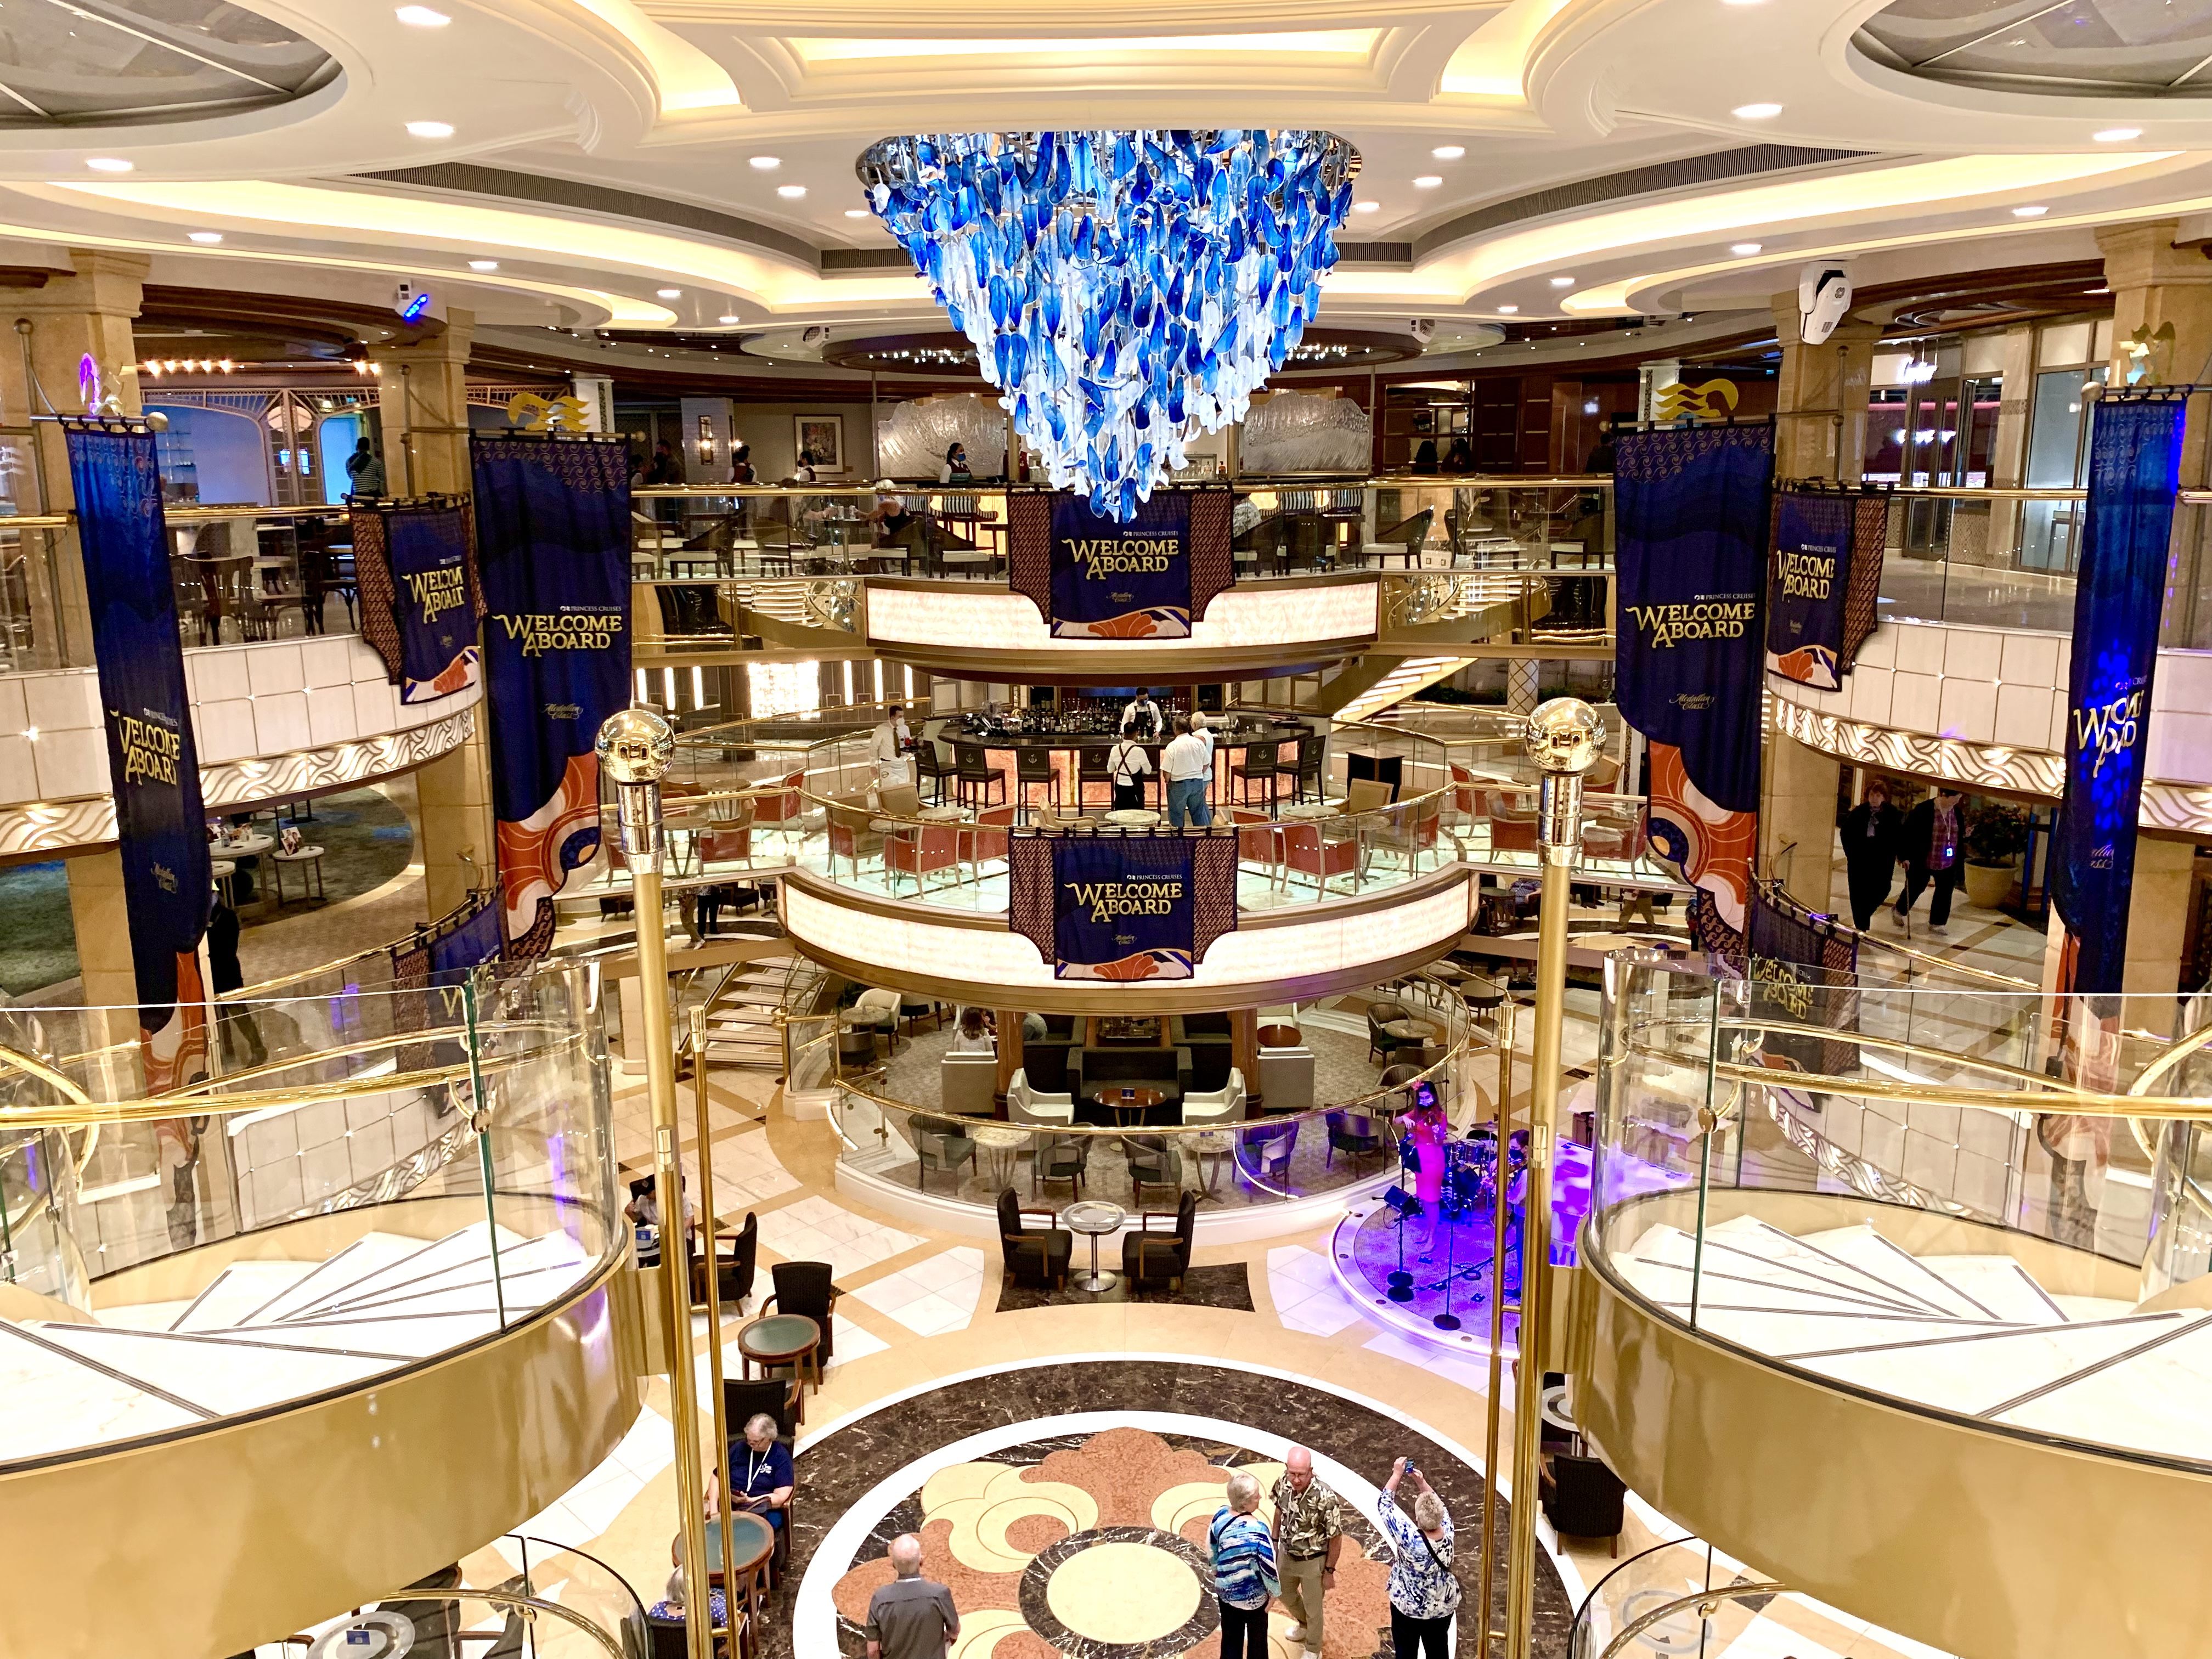 Majestic Princess Alaska Cruise Review - EatSleepCruise.com